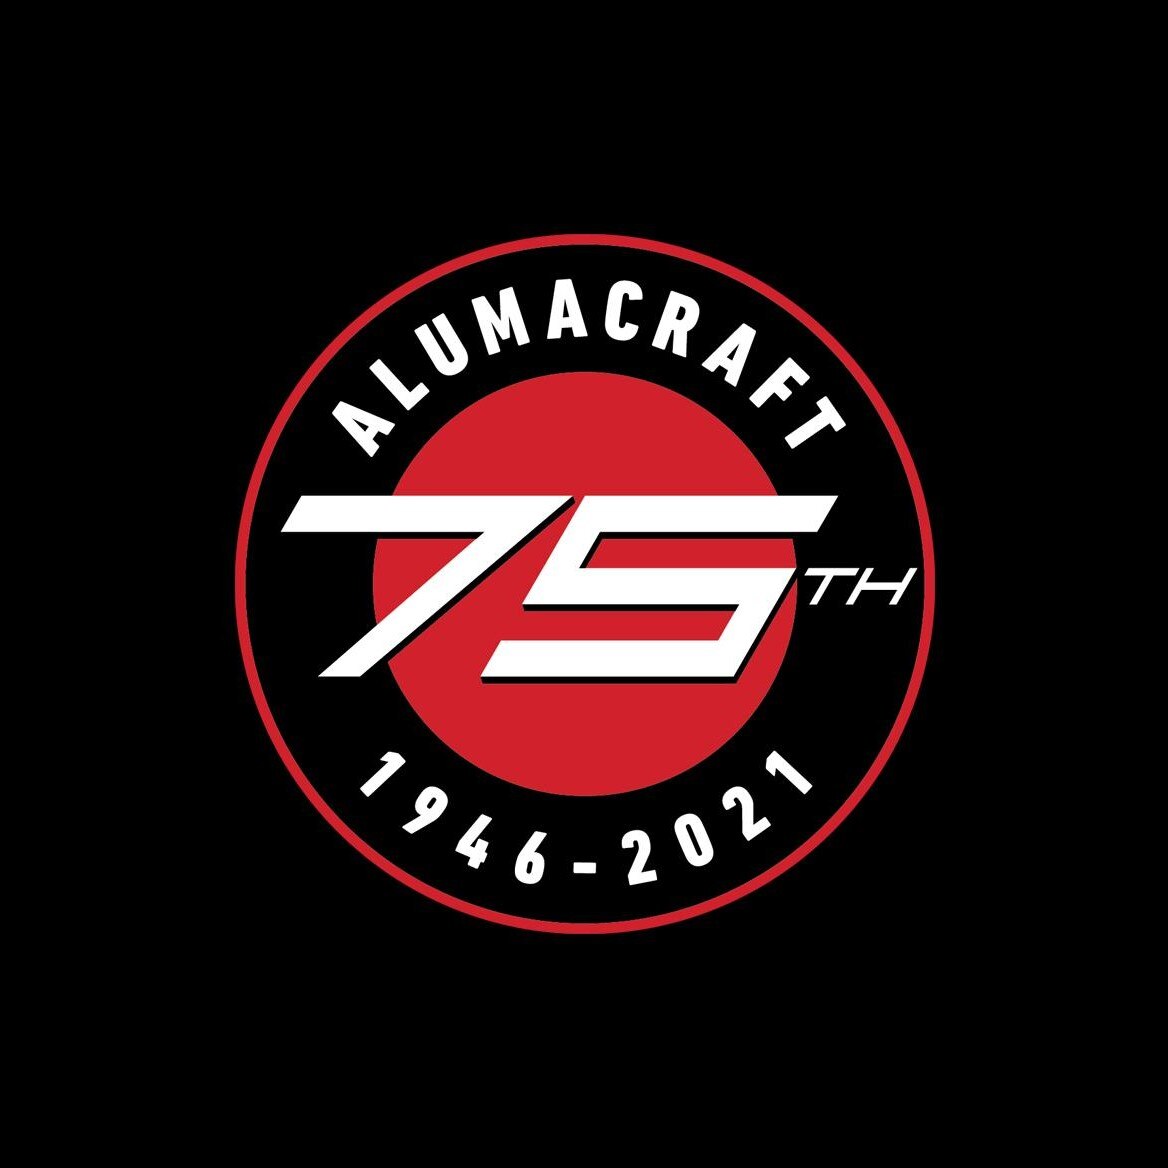 Alumacraft 75th anniversary logo 